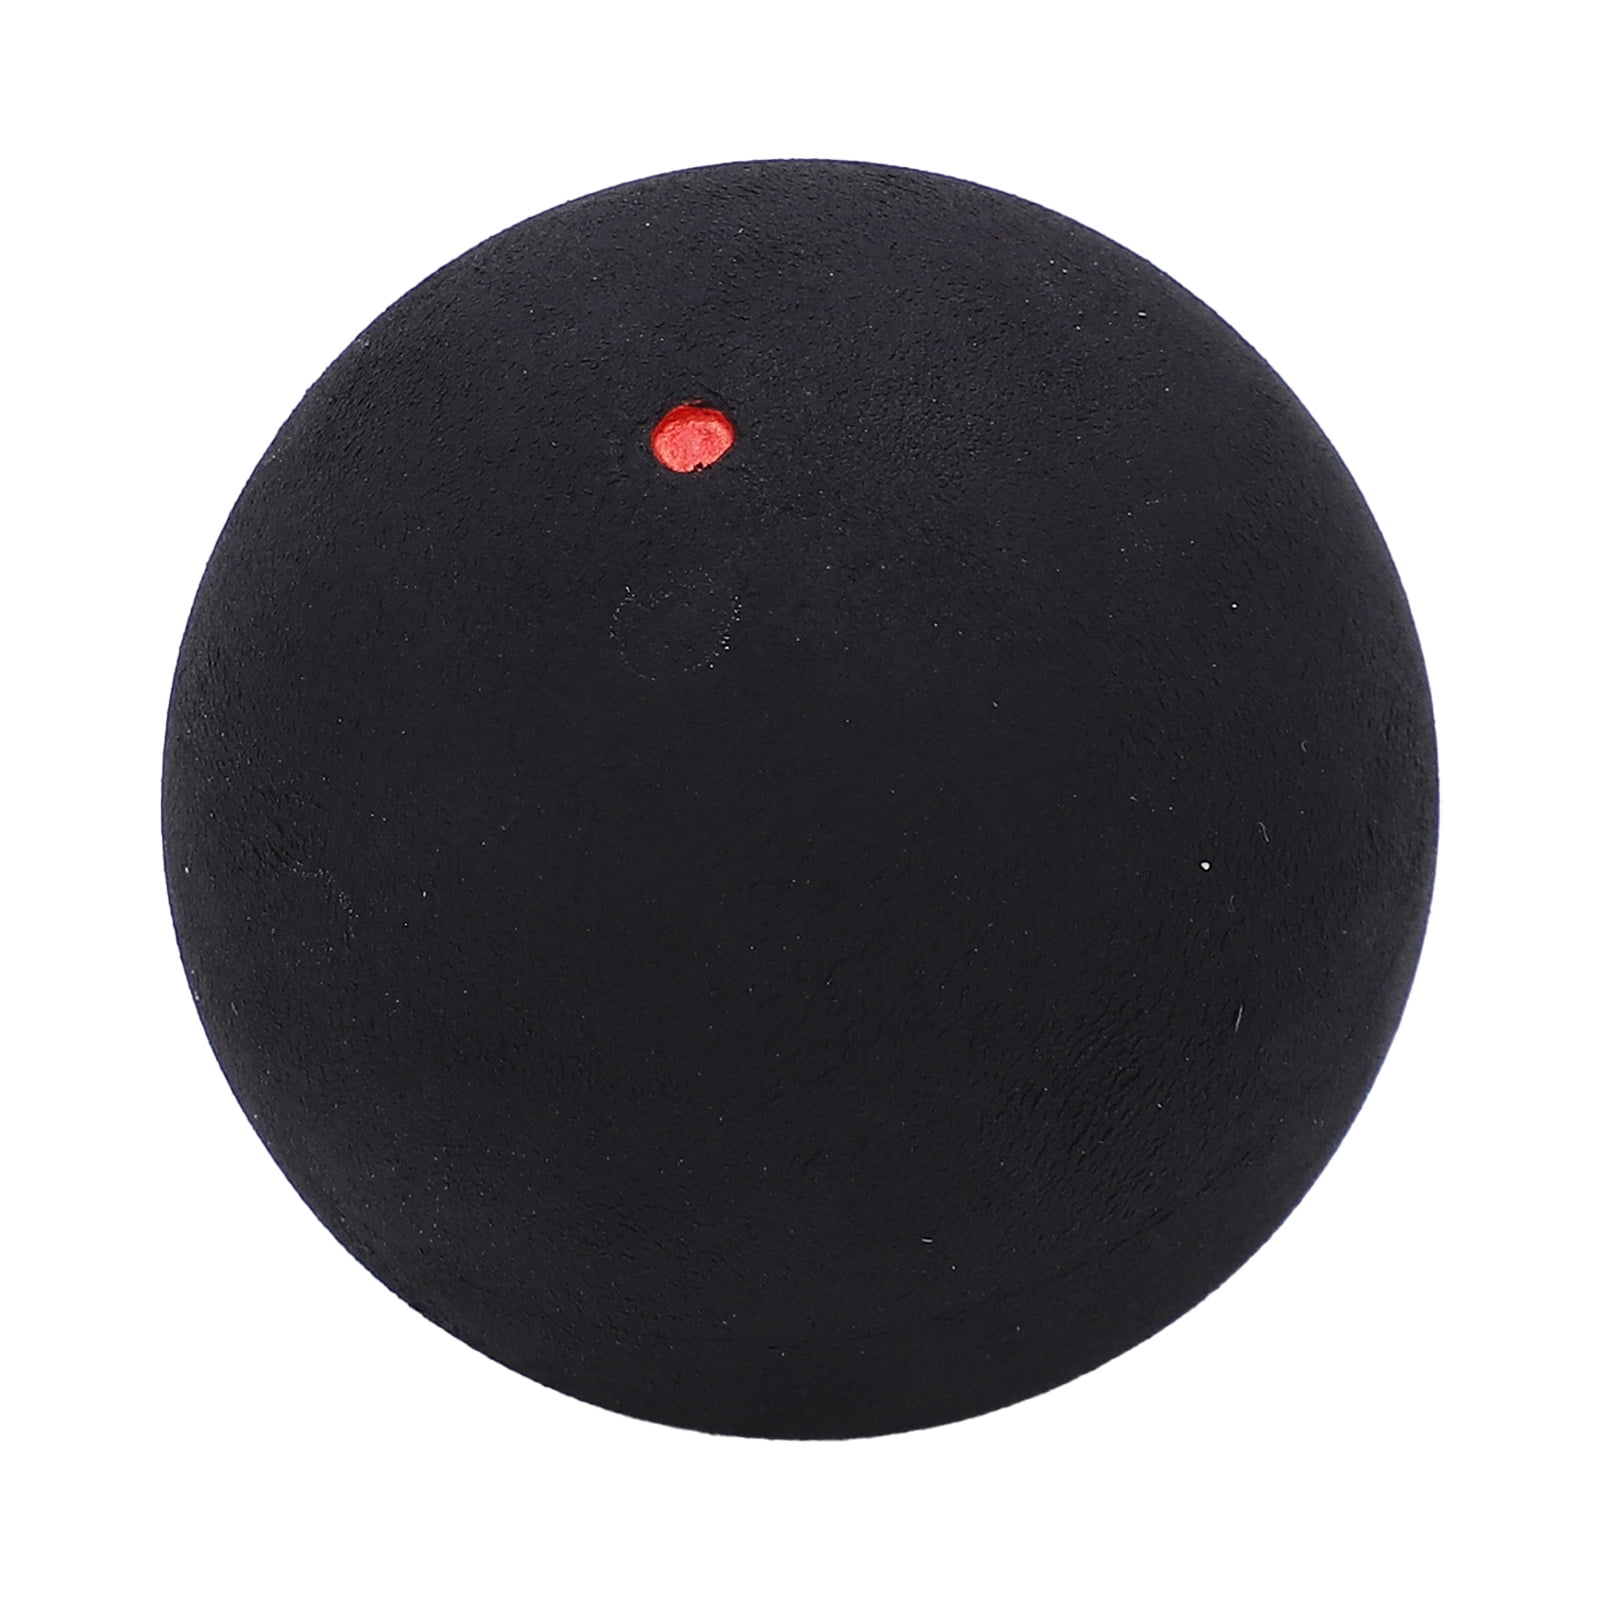 37mm Single Dot Squash Balls Rubber Squash Racket Balls for Beginner Training 